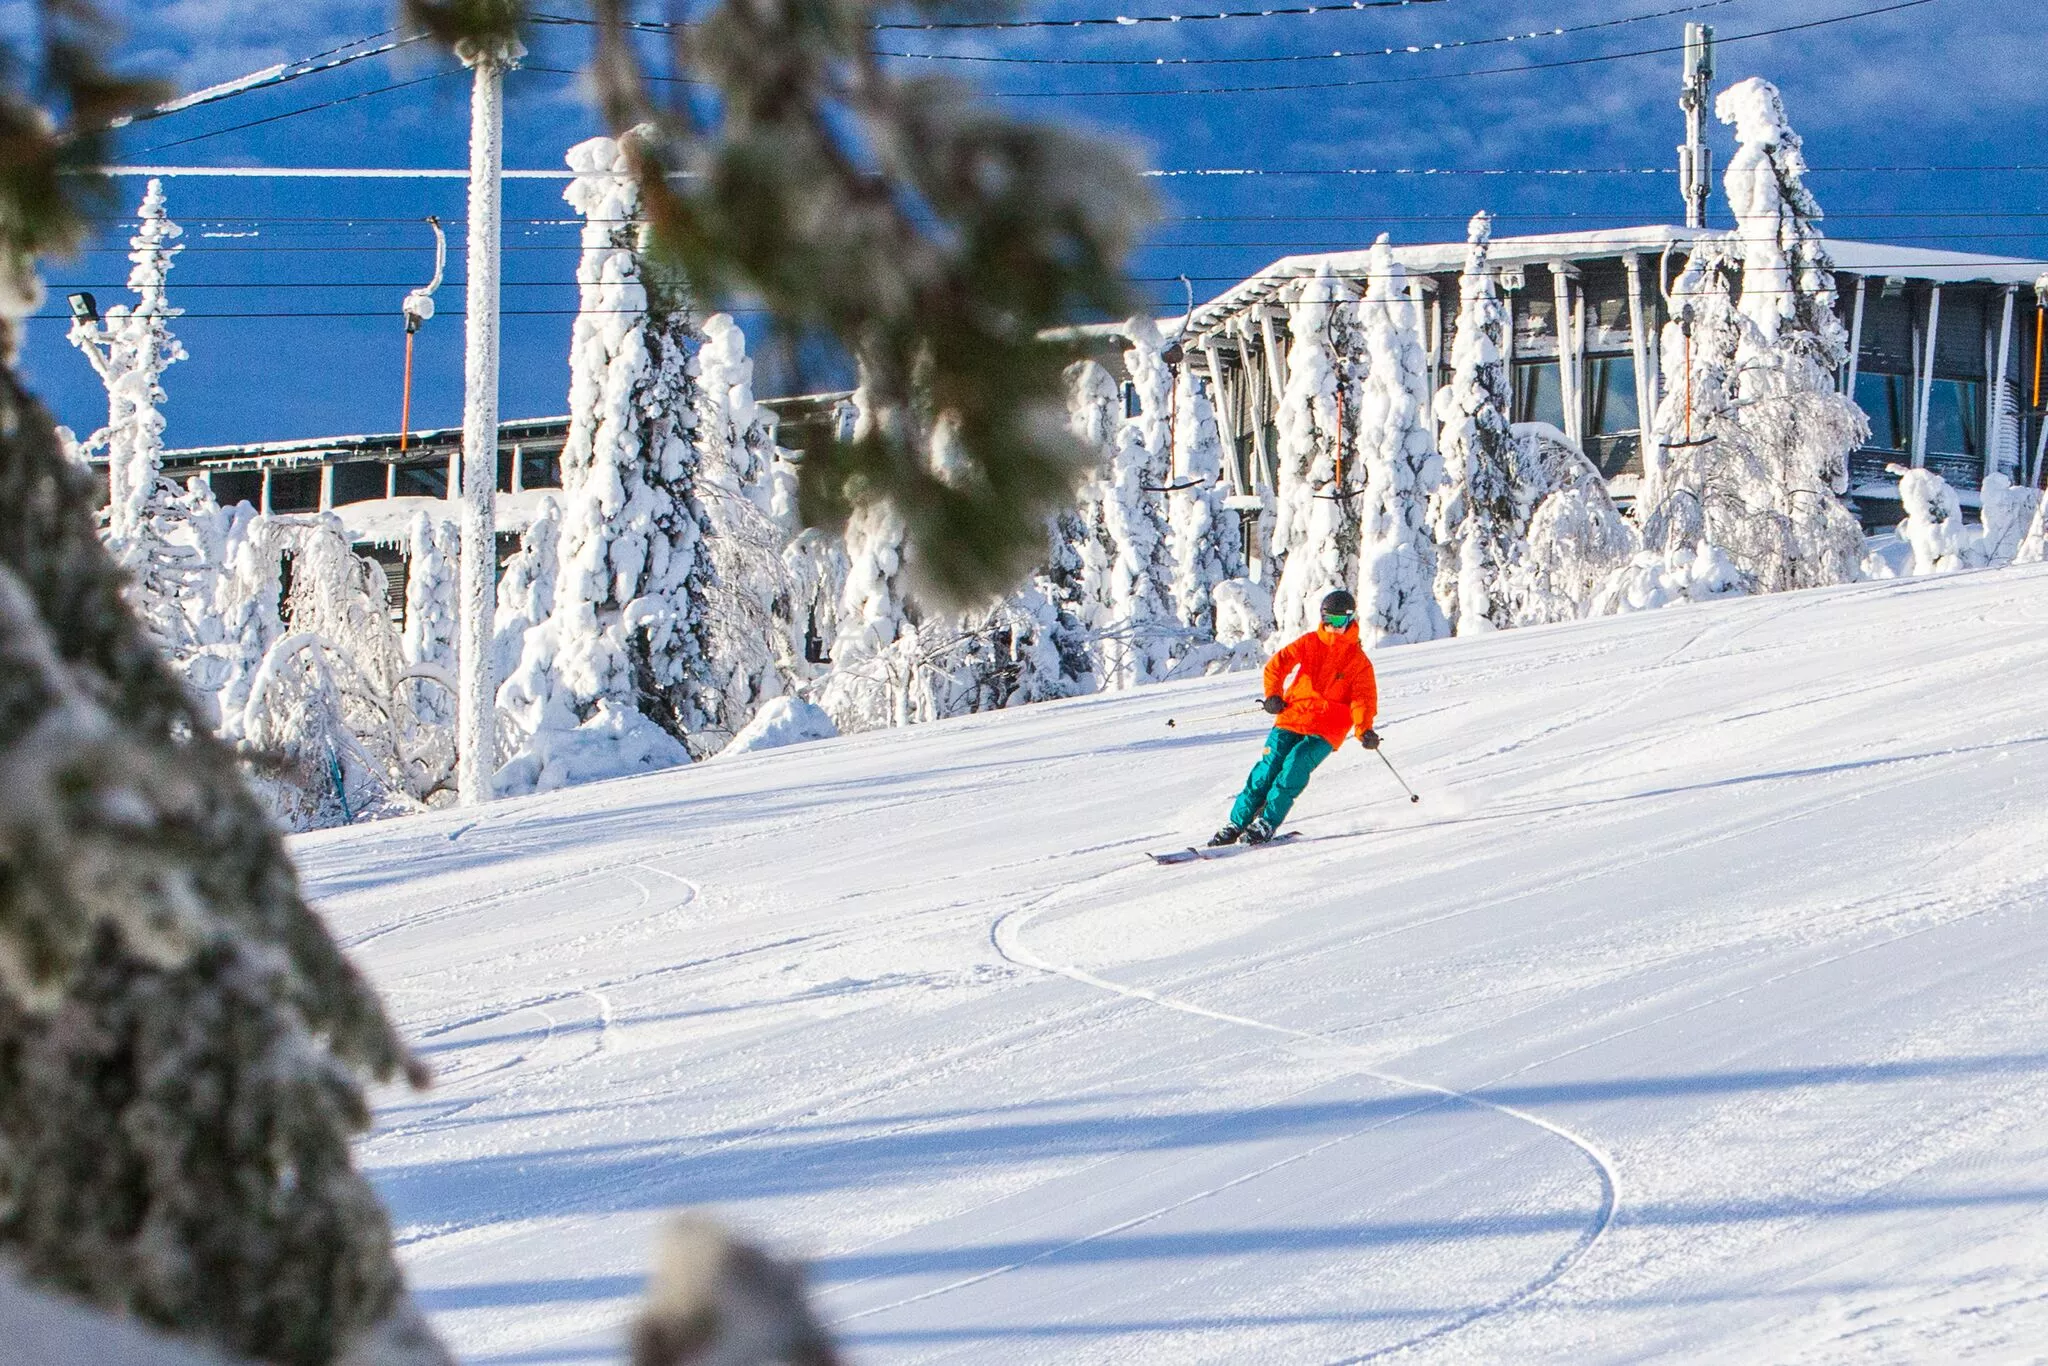 Hiihtokeskus Iso-Syote Oy in Finland, Europe | Snowboarding,Skiing - Rated 3.7